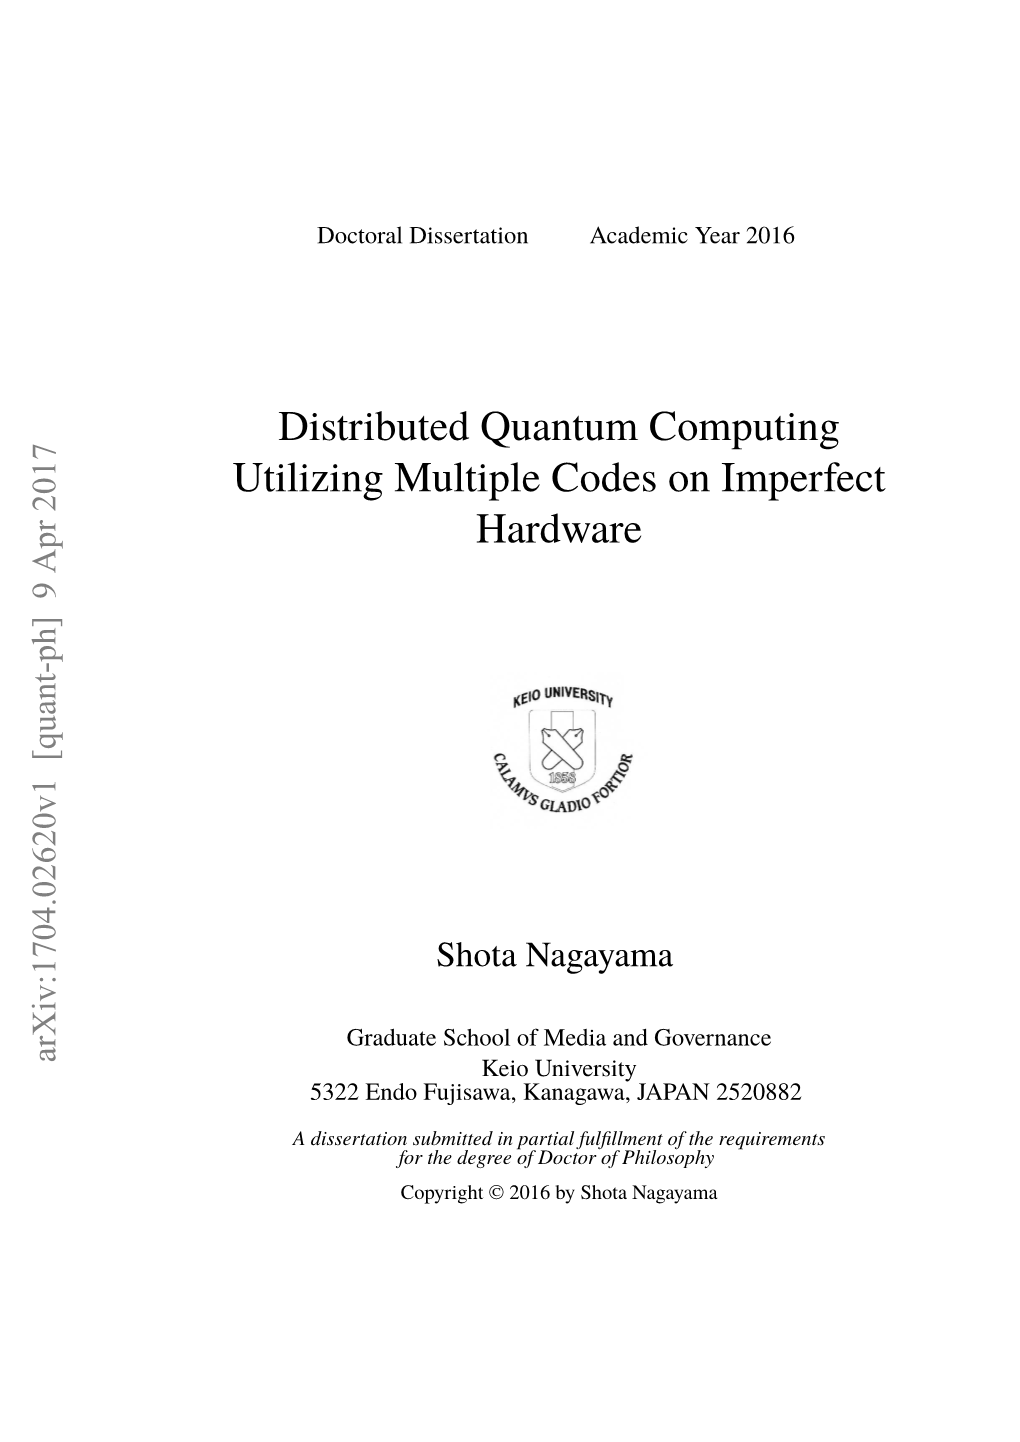 Distributed Quantum Computing Utilizing Multiple Codes on Imperfect Hardware